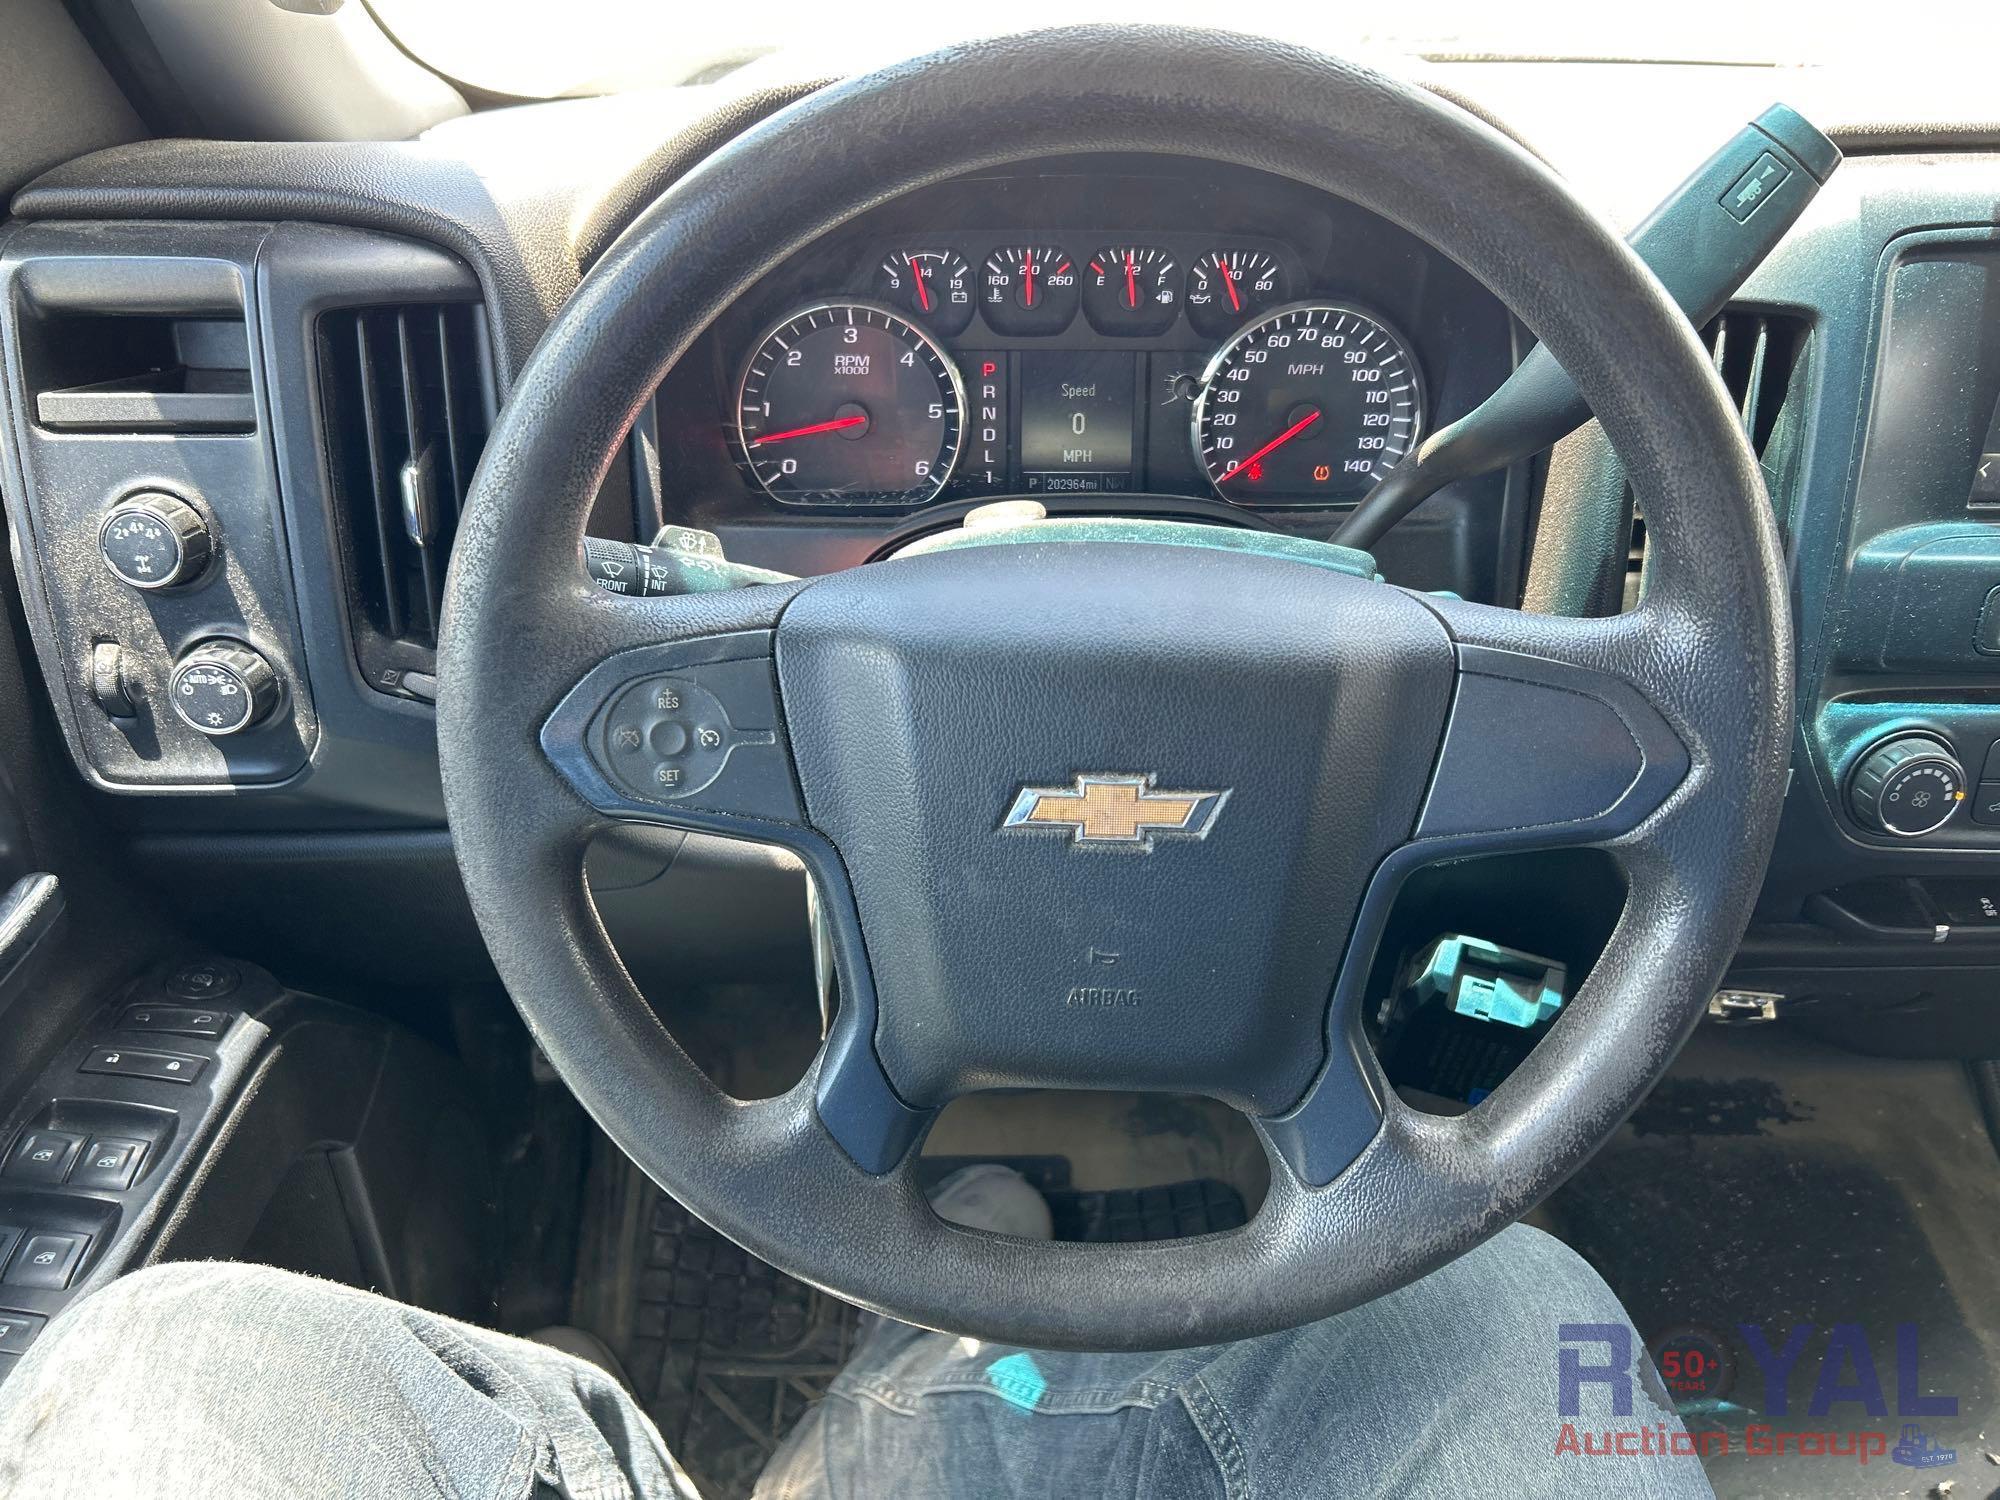 2018 Chevrolet Silverado 2500 HD 4x4 Crew Cab Pickup Truck